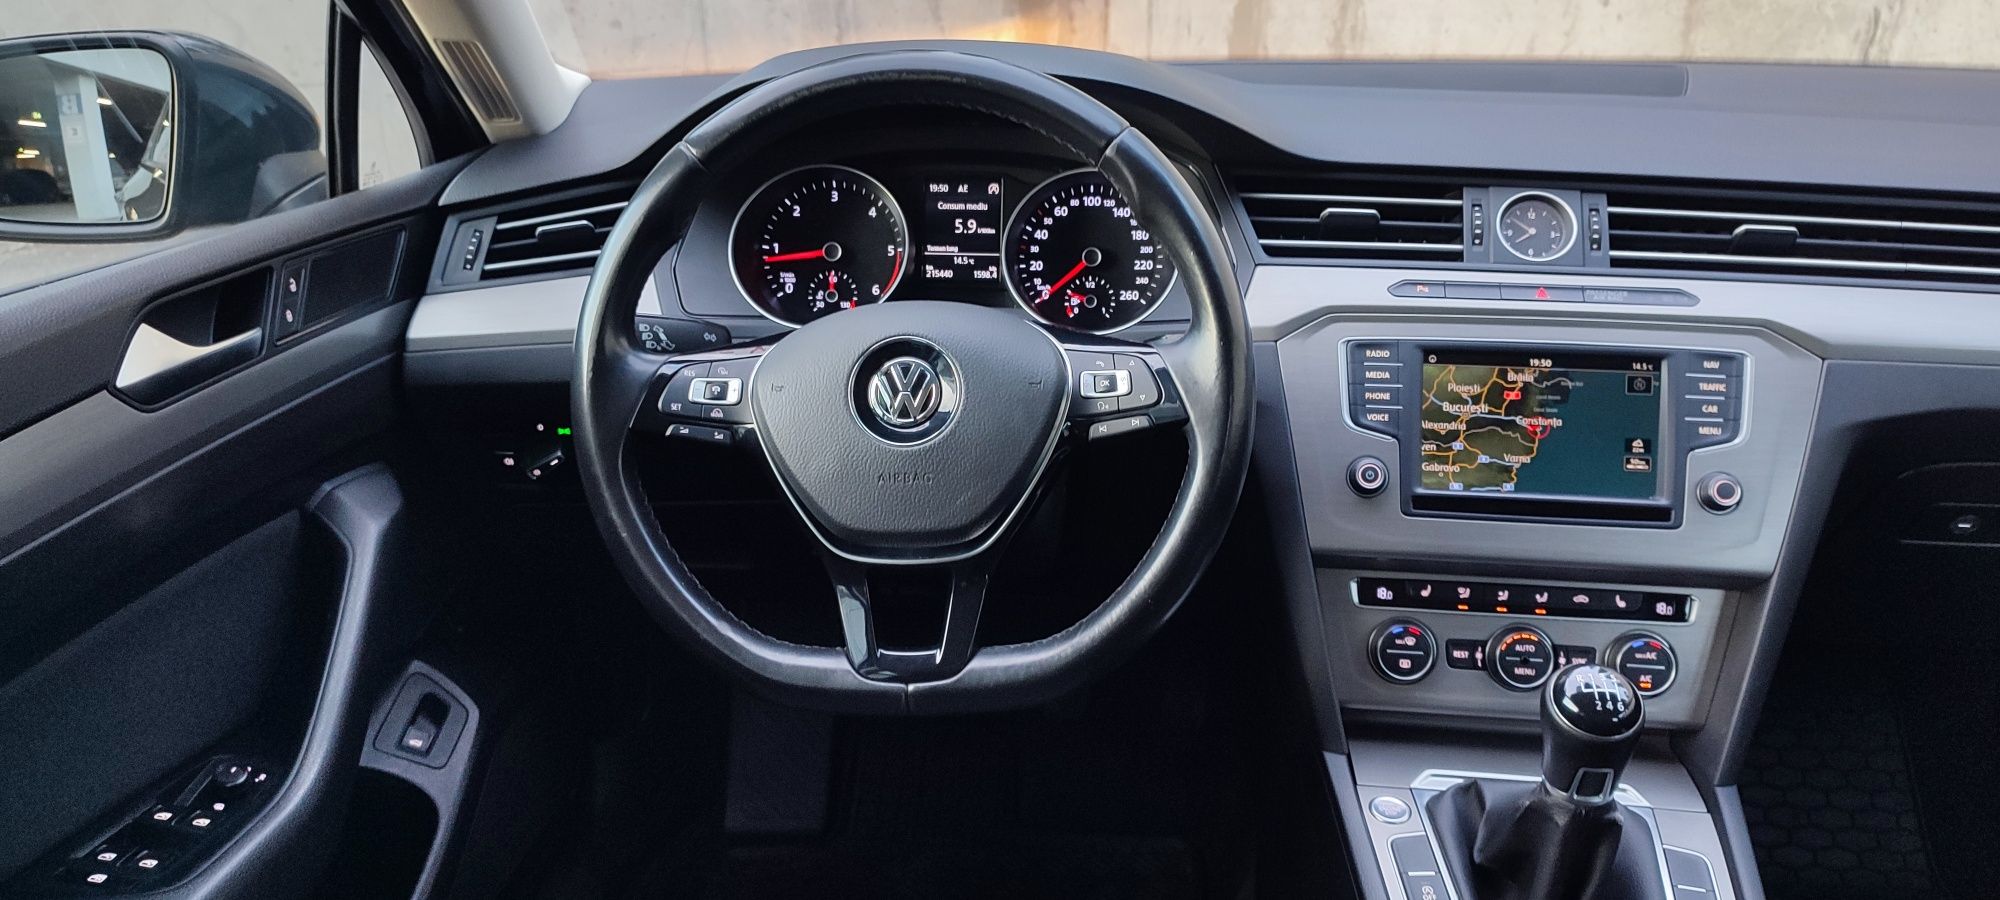 VW Passat 2016 Diesel